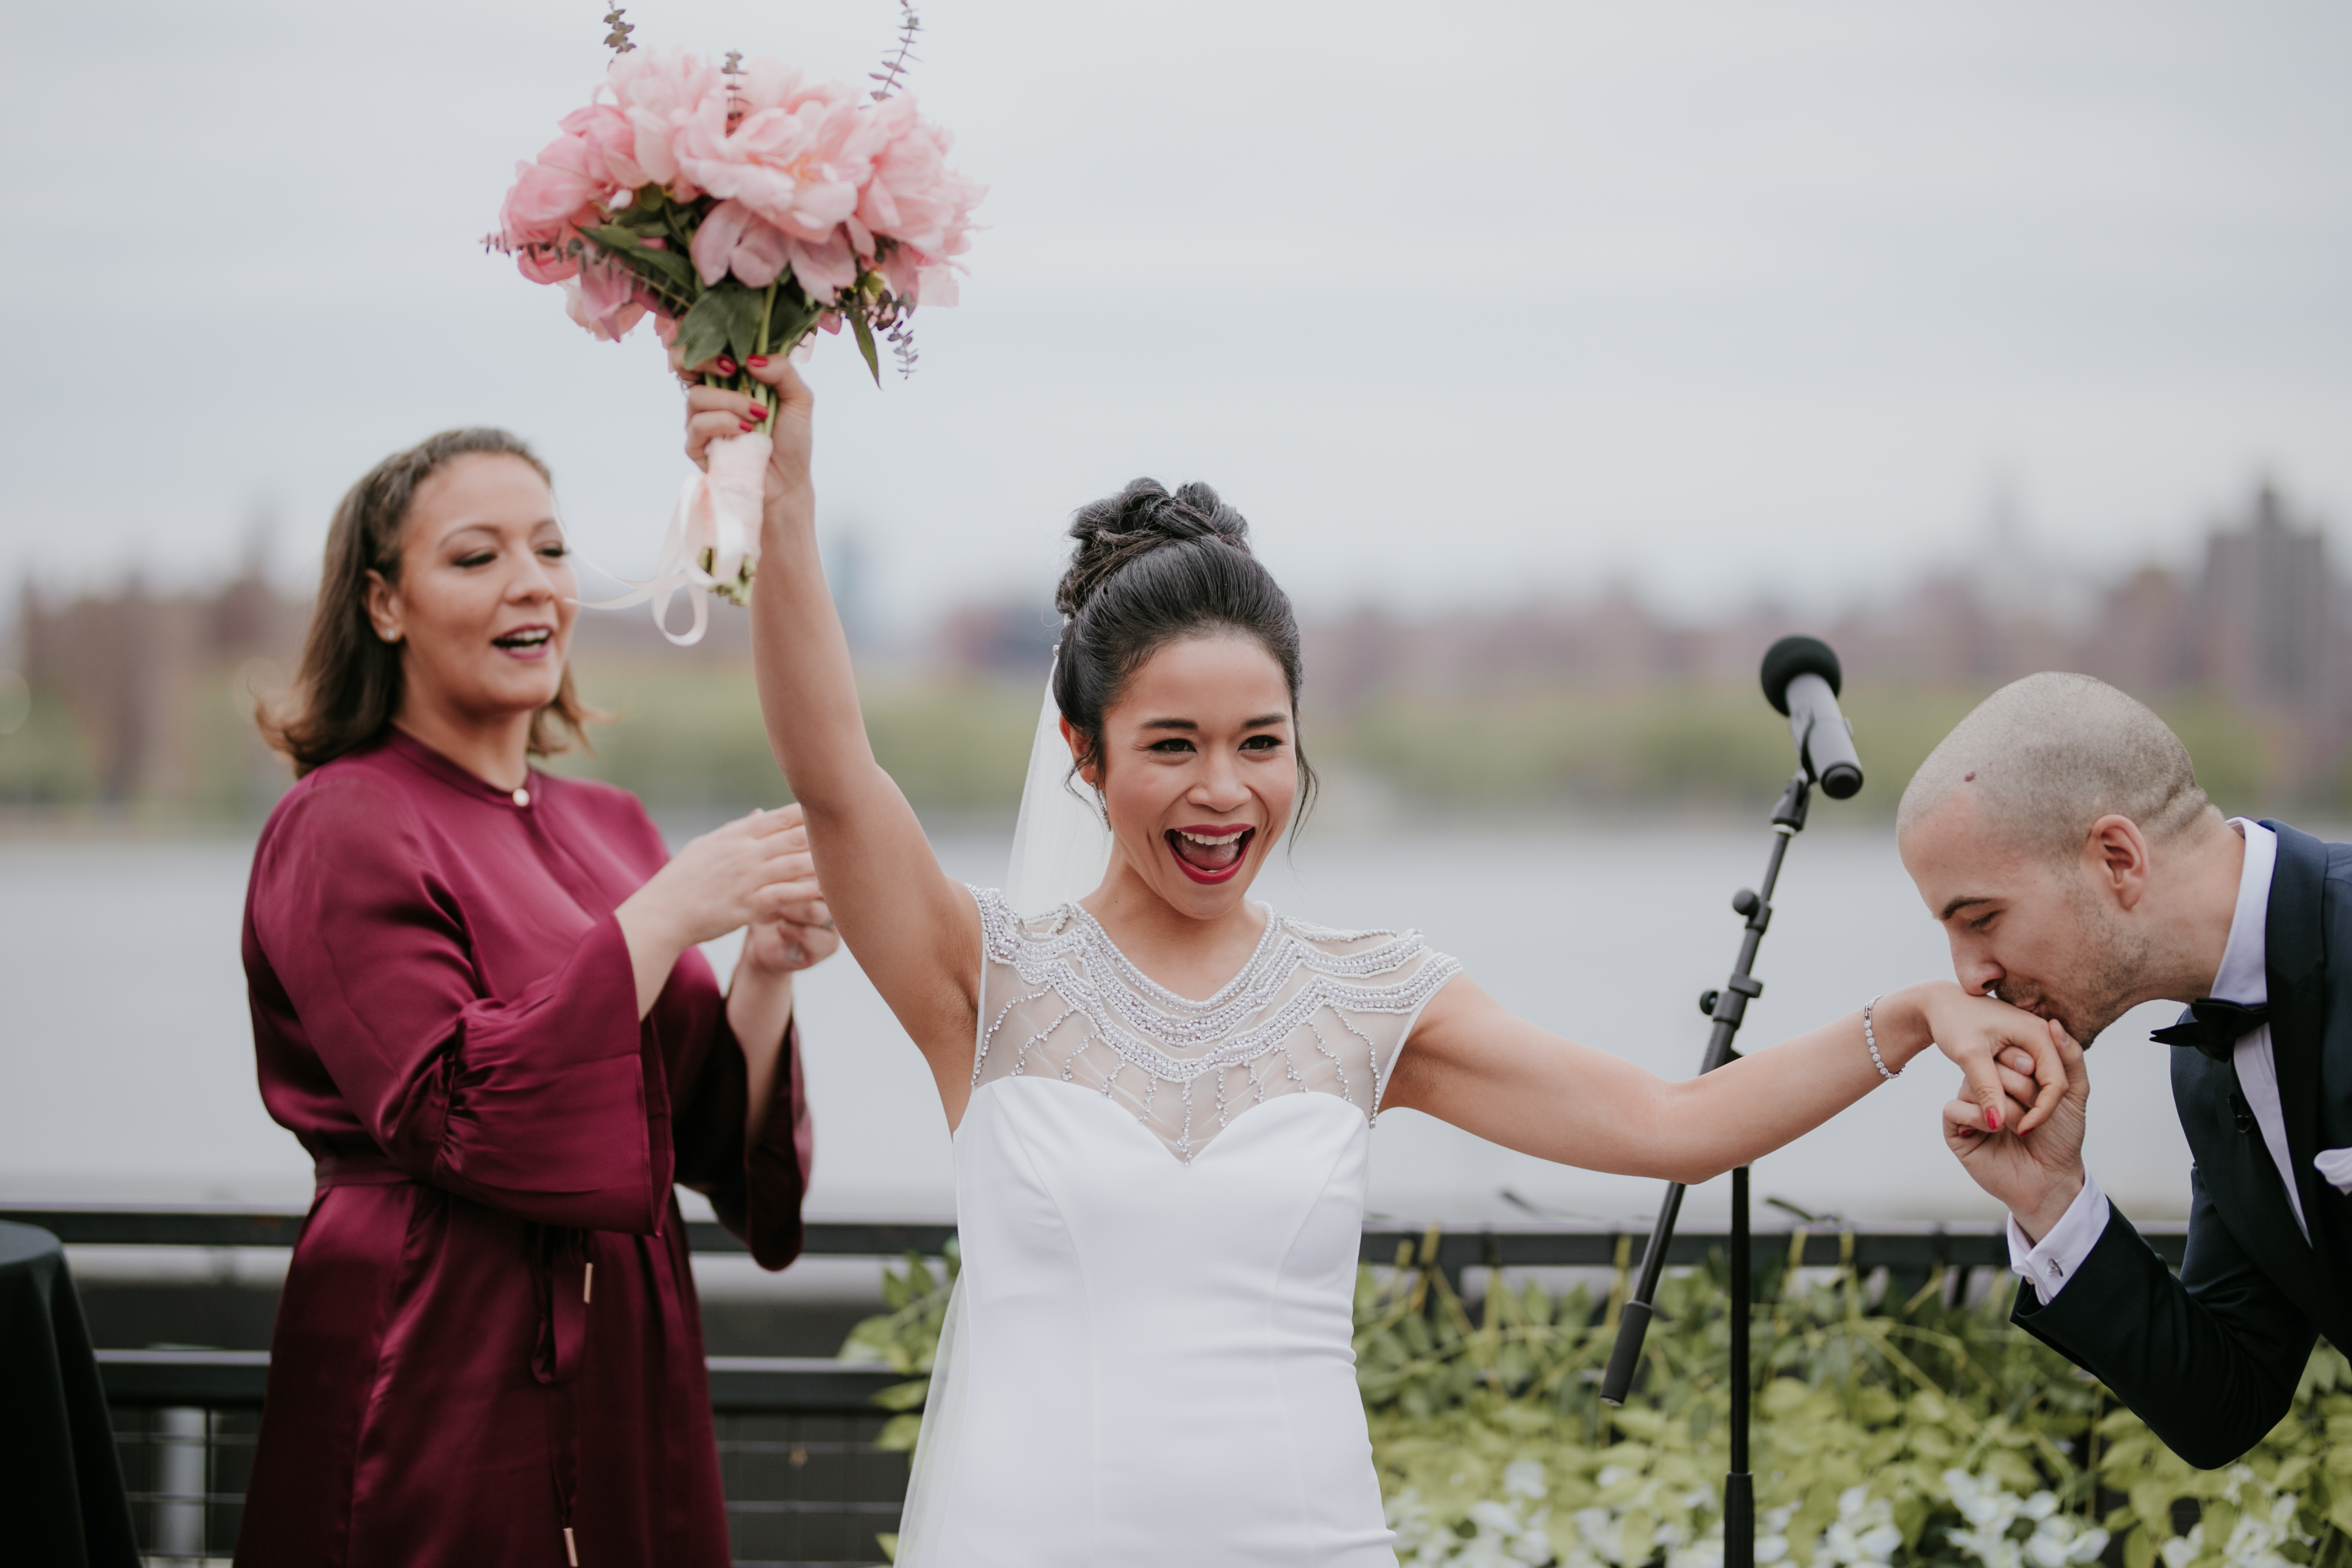 05 06 18 Elodie and Bertrand Wedding 233 - Wedding Video Sweepstakes Winners Wed at The W Loft in Brooklyn